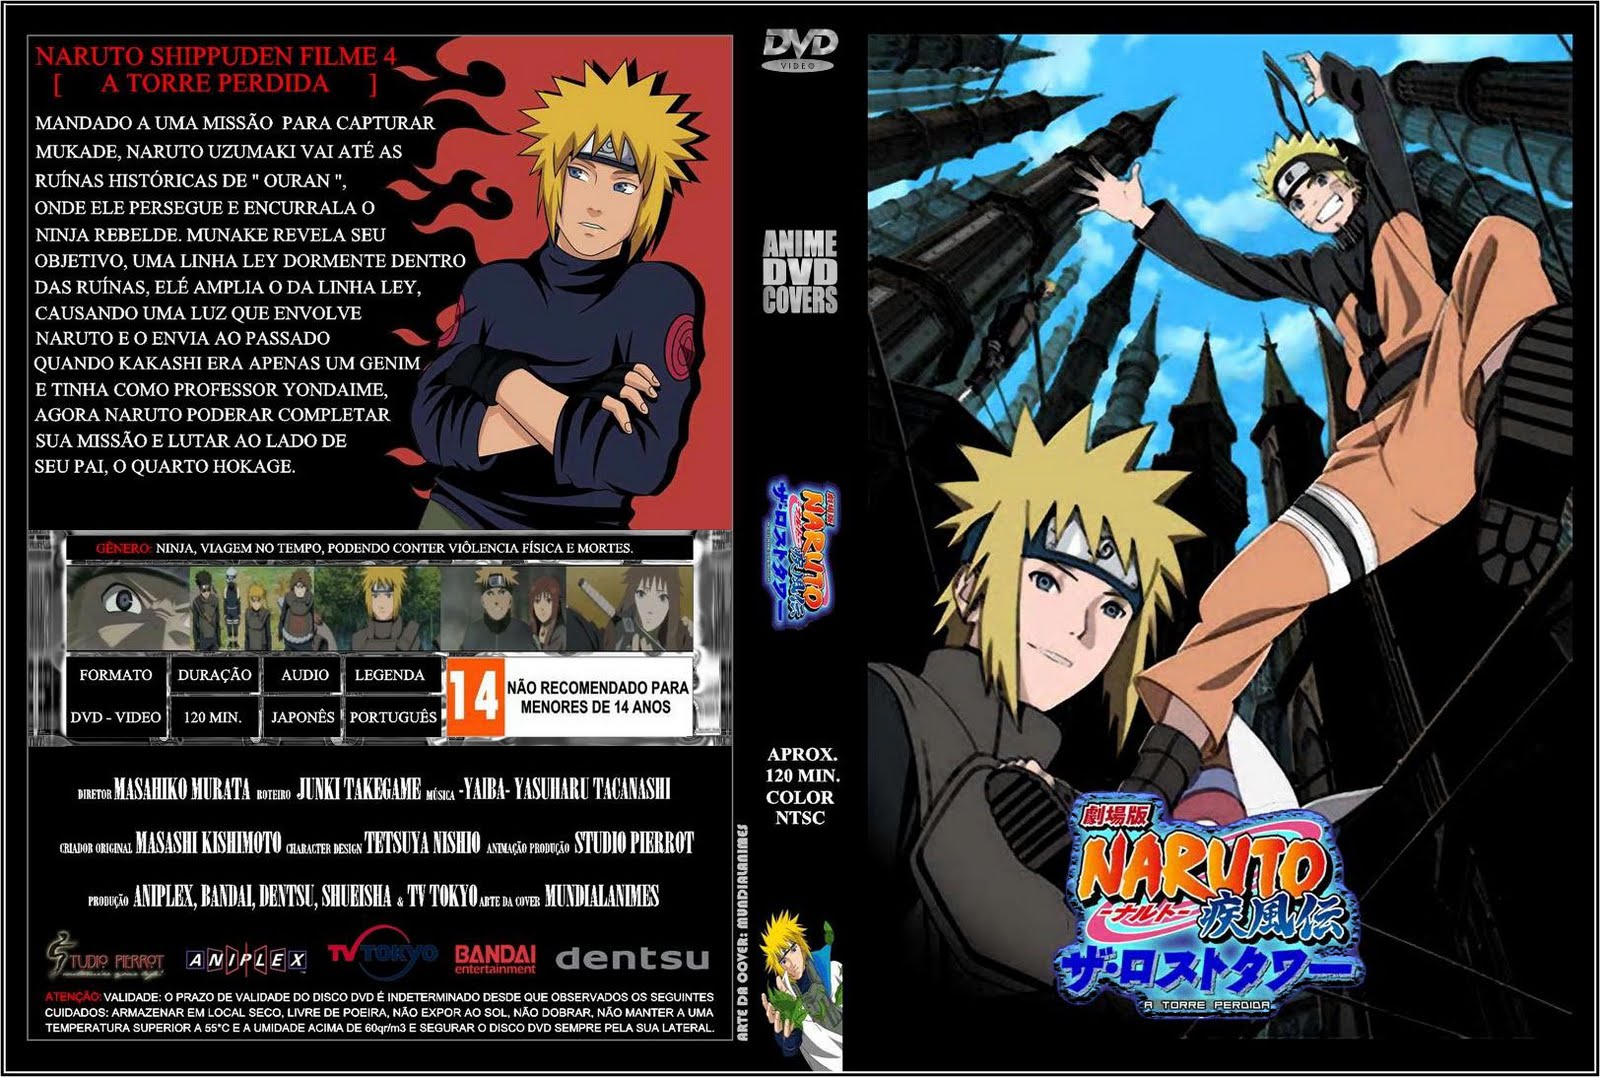 Naruto Shippuden Movies 5/7 calidad 720p dual Ingles y Japones + Sub Latino Naruto+Shippuuden+Filme+04